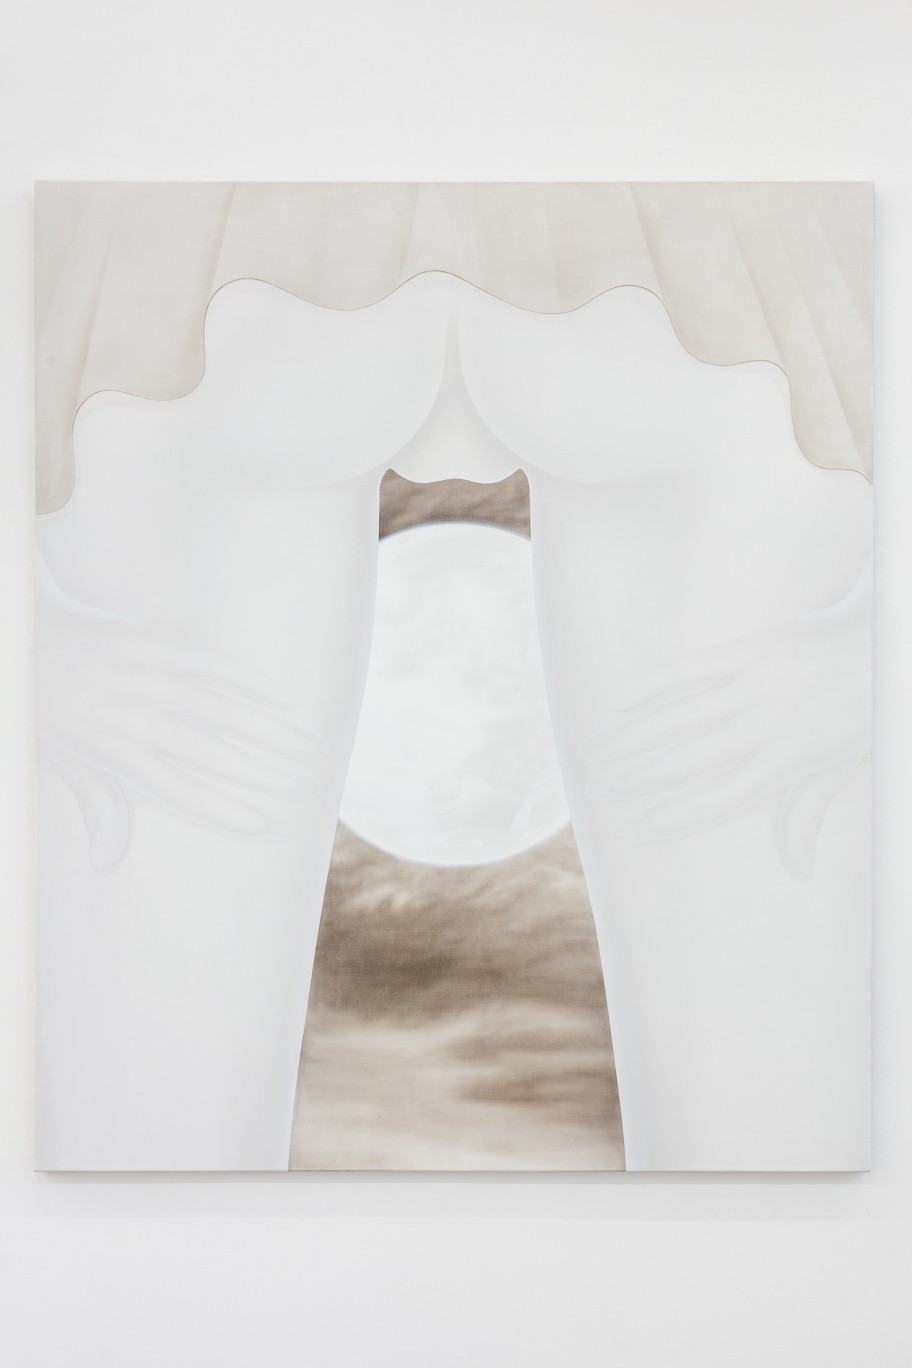 Melanie Ebenhoch 3 AM, 2020 Öl auf Leinwand 150 x 127 cm 